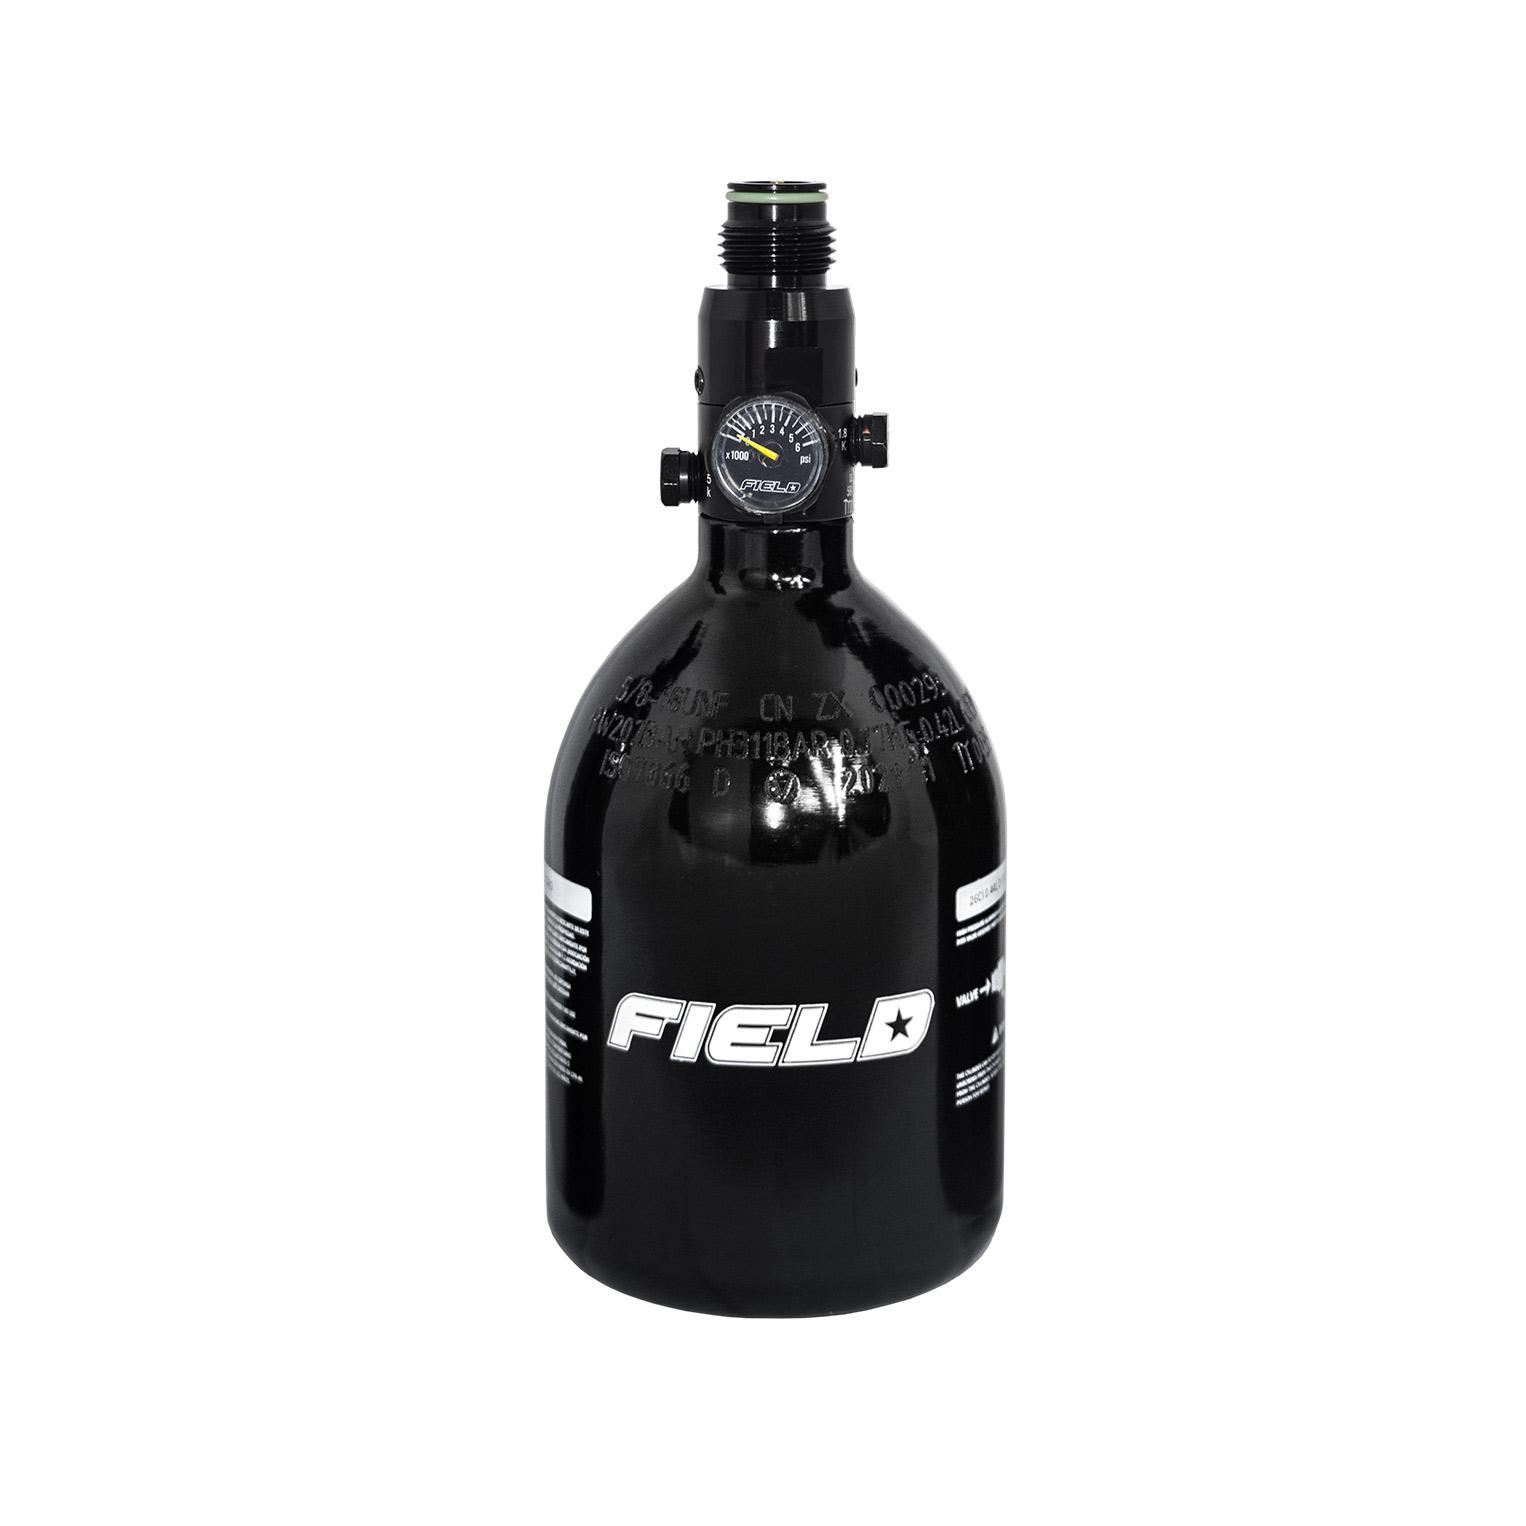 Field Botella 0.4L - 26ci c/Regulador 3K Psi V3